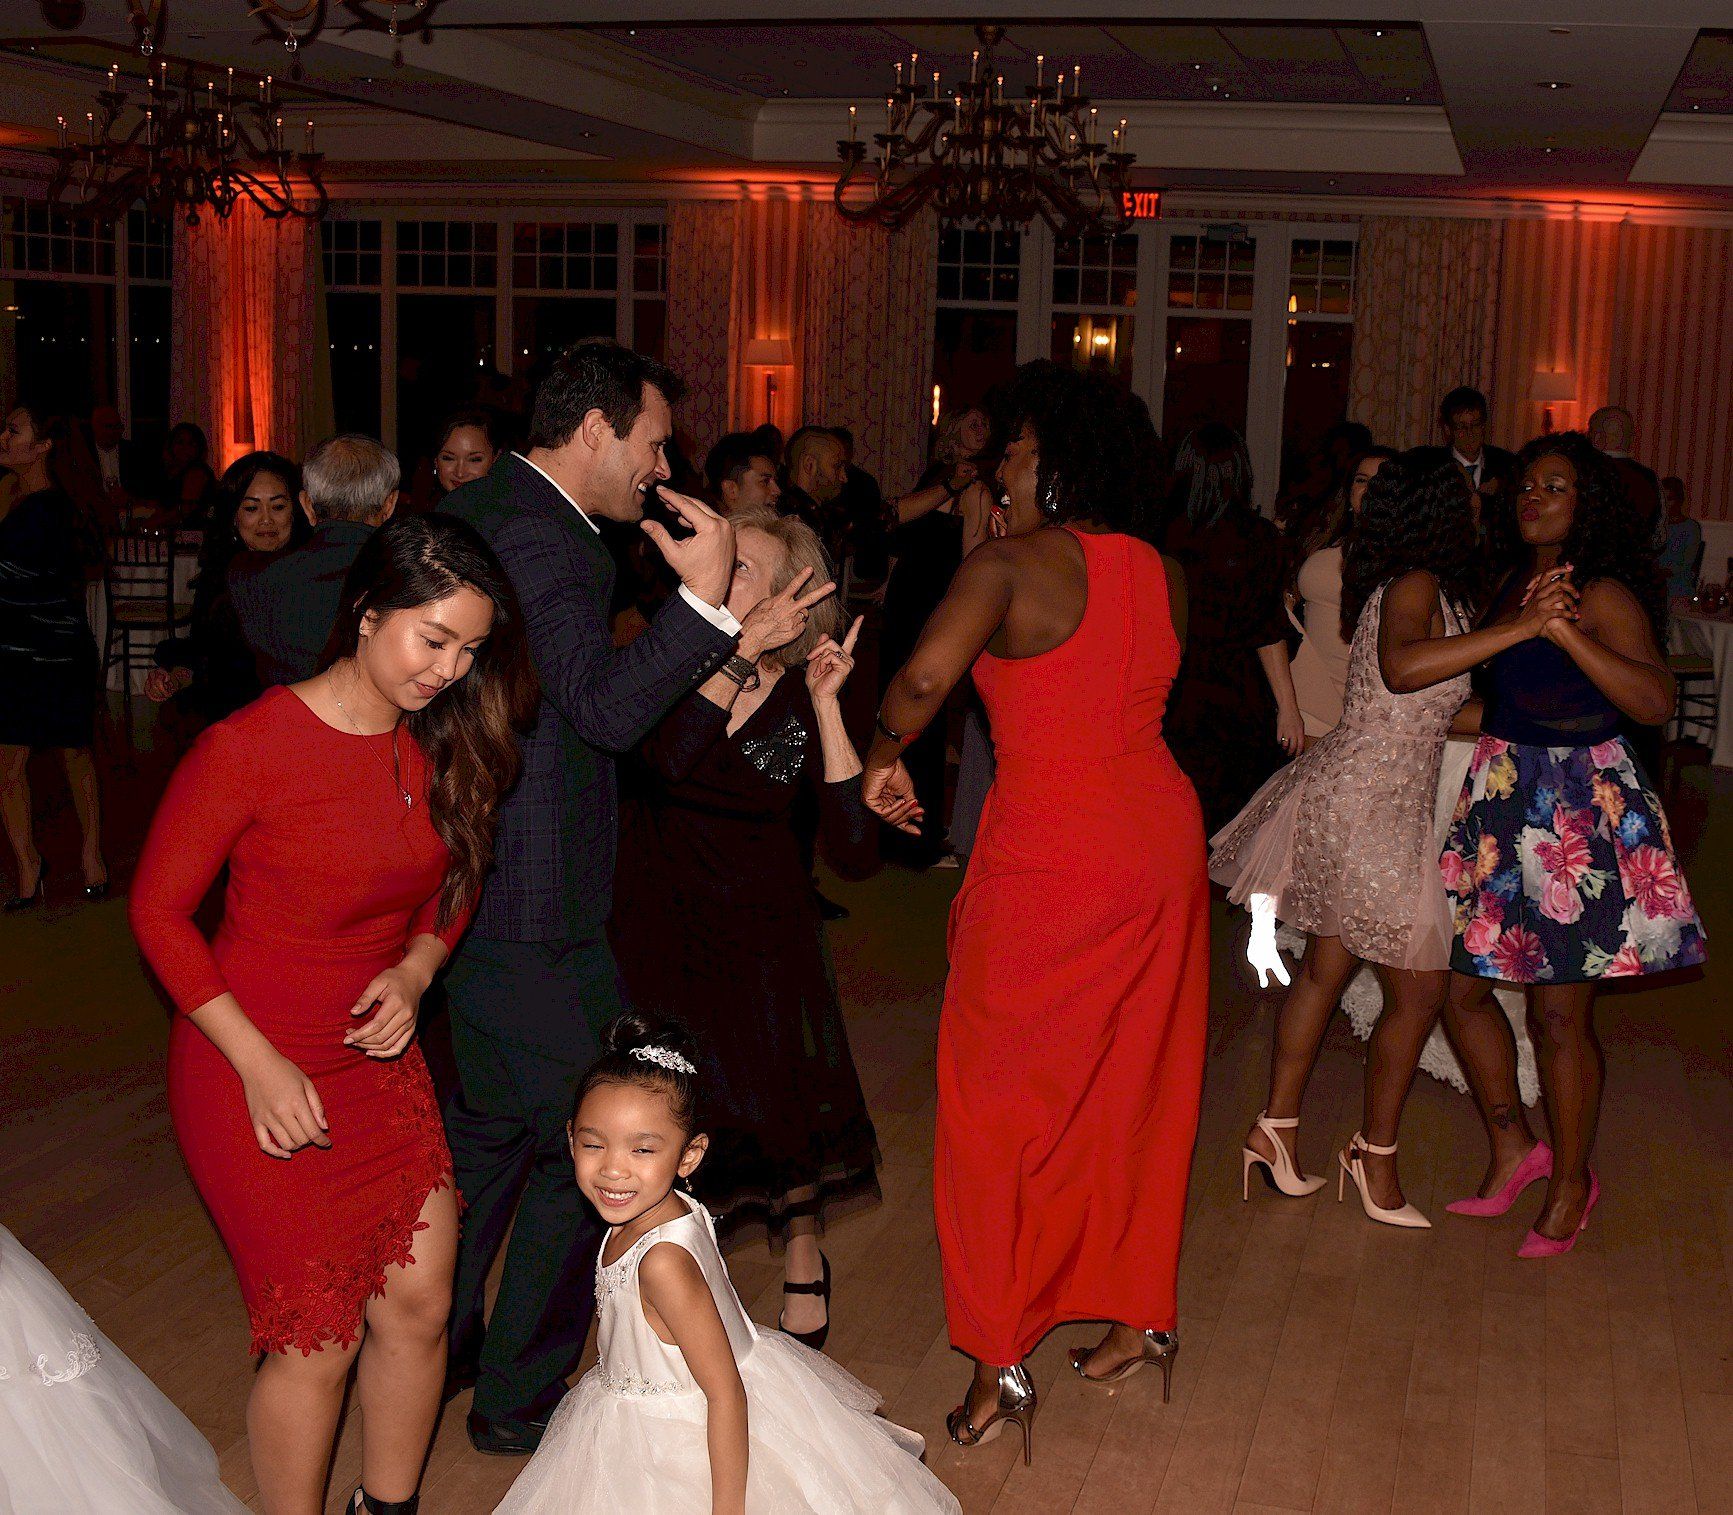 MA wedding DJ guests dancing at Beauport Hotel, Gloucester, Massachusetts